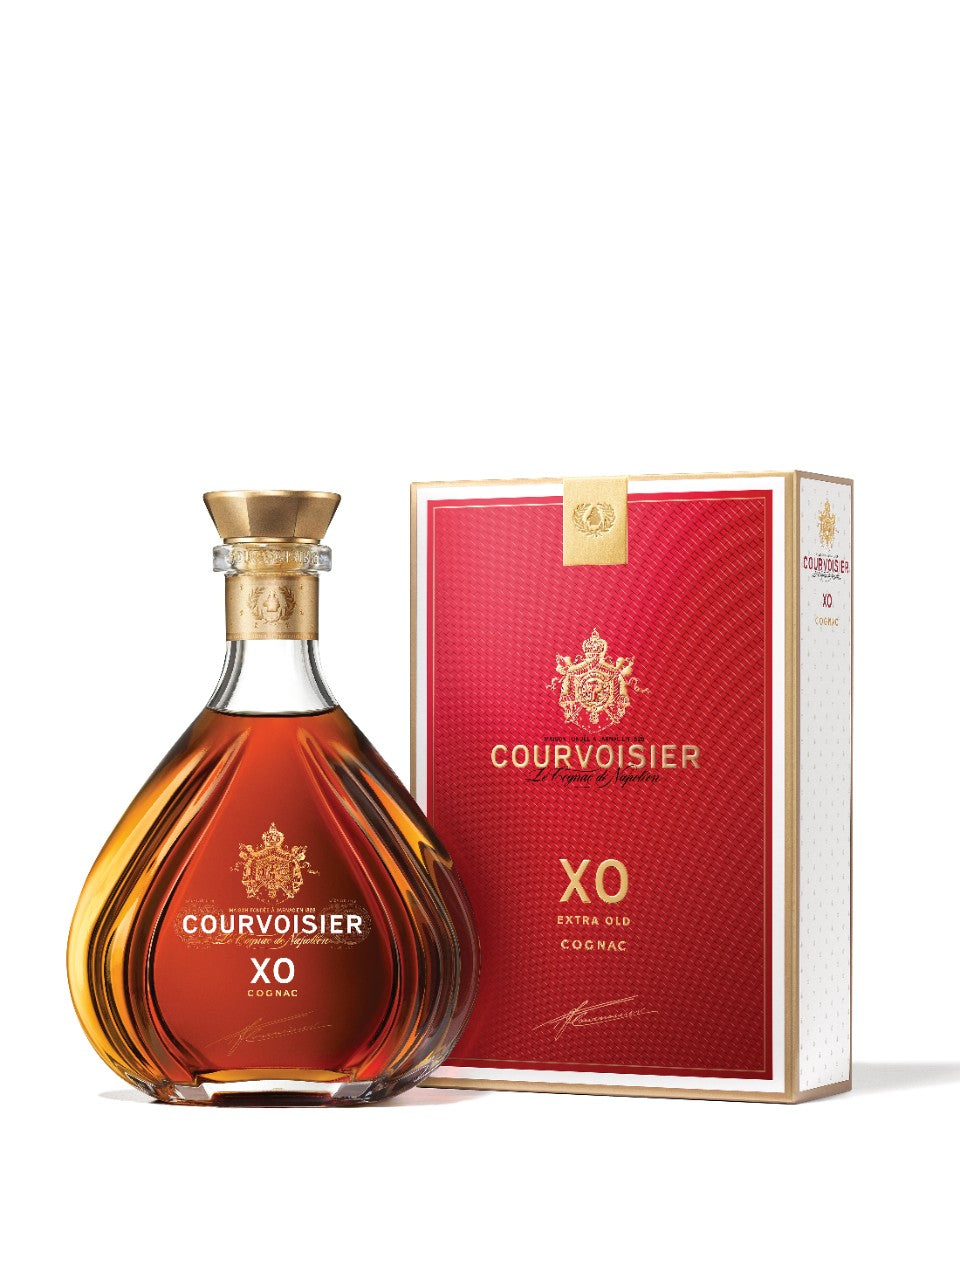 Courvoisier XO Cognac  750 mL bottle